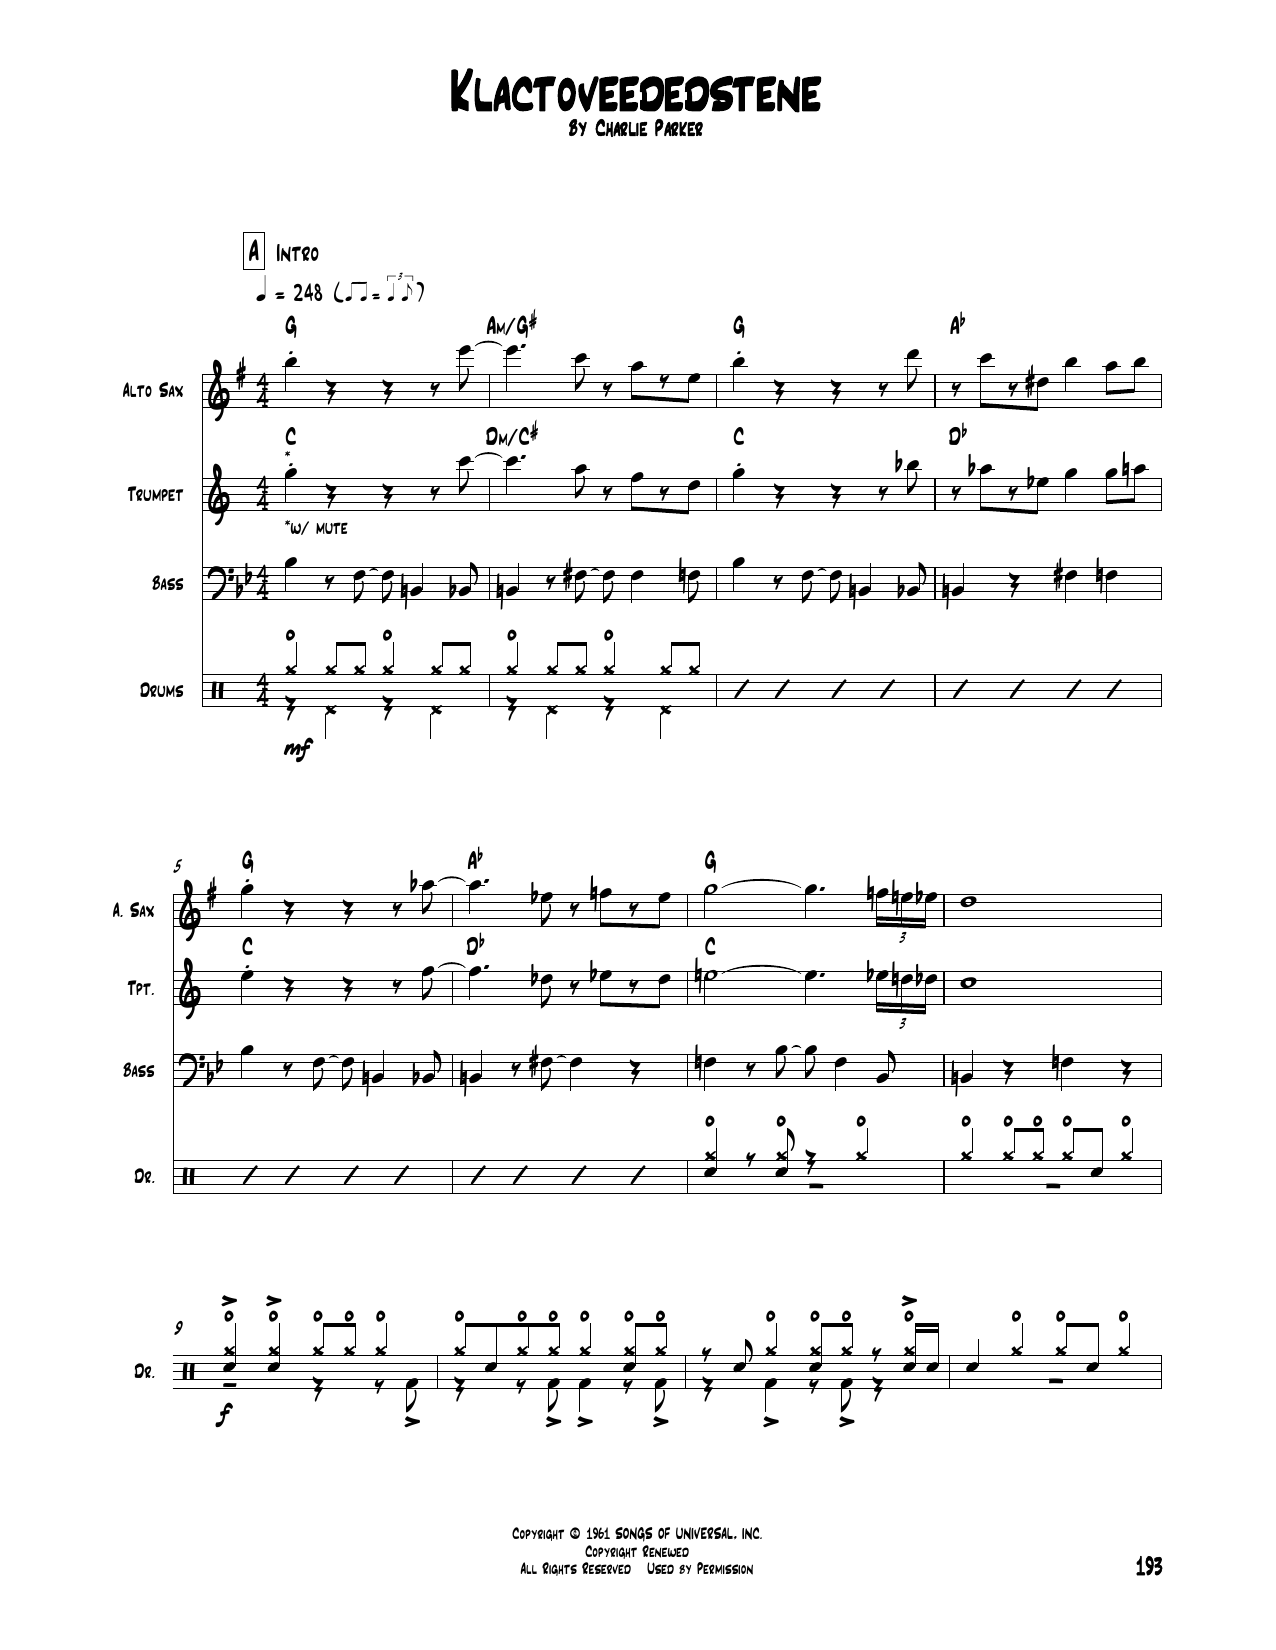 Charlie Parker Klactoveededstene Sheet Music Notes & Chords for Real Book – Melody & Chords - Download or Print PDF